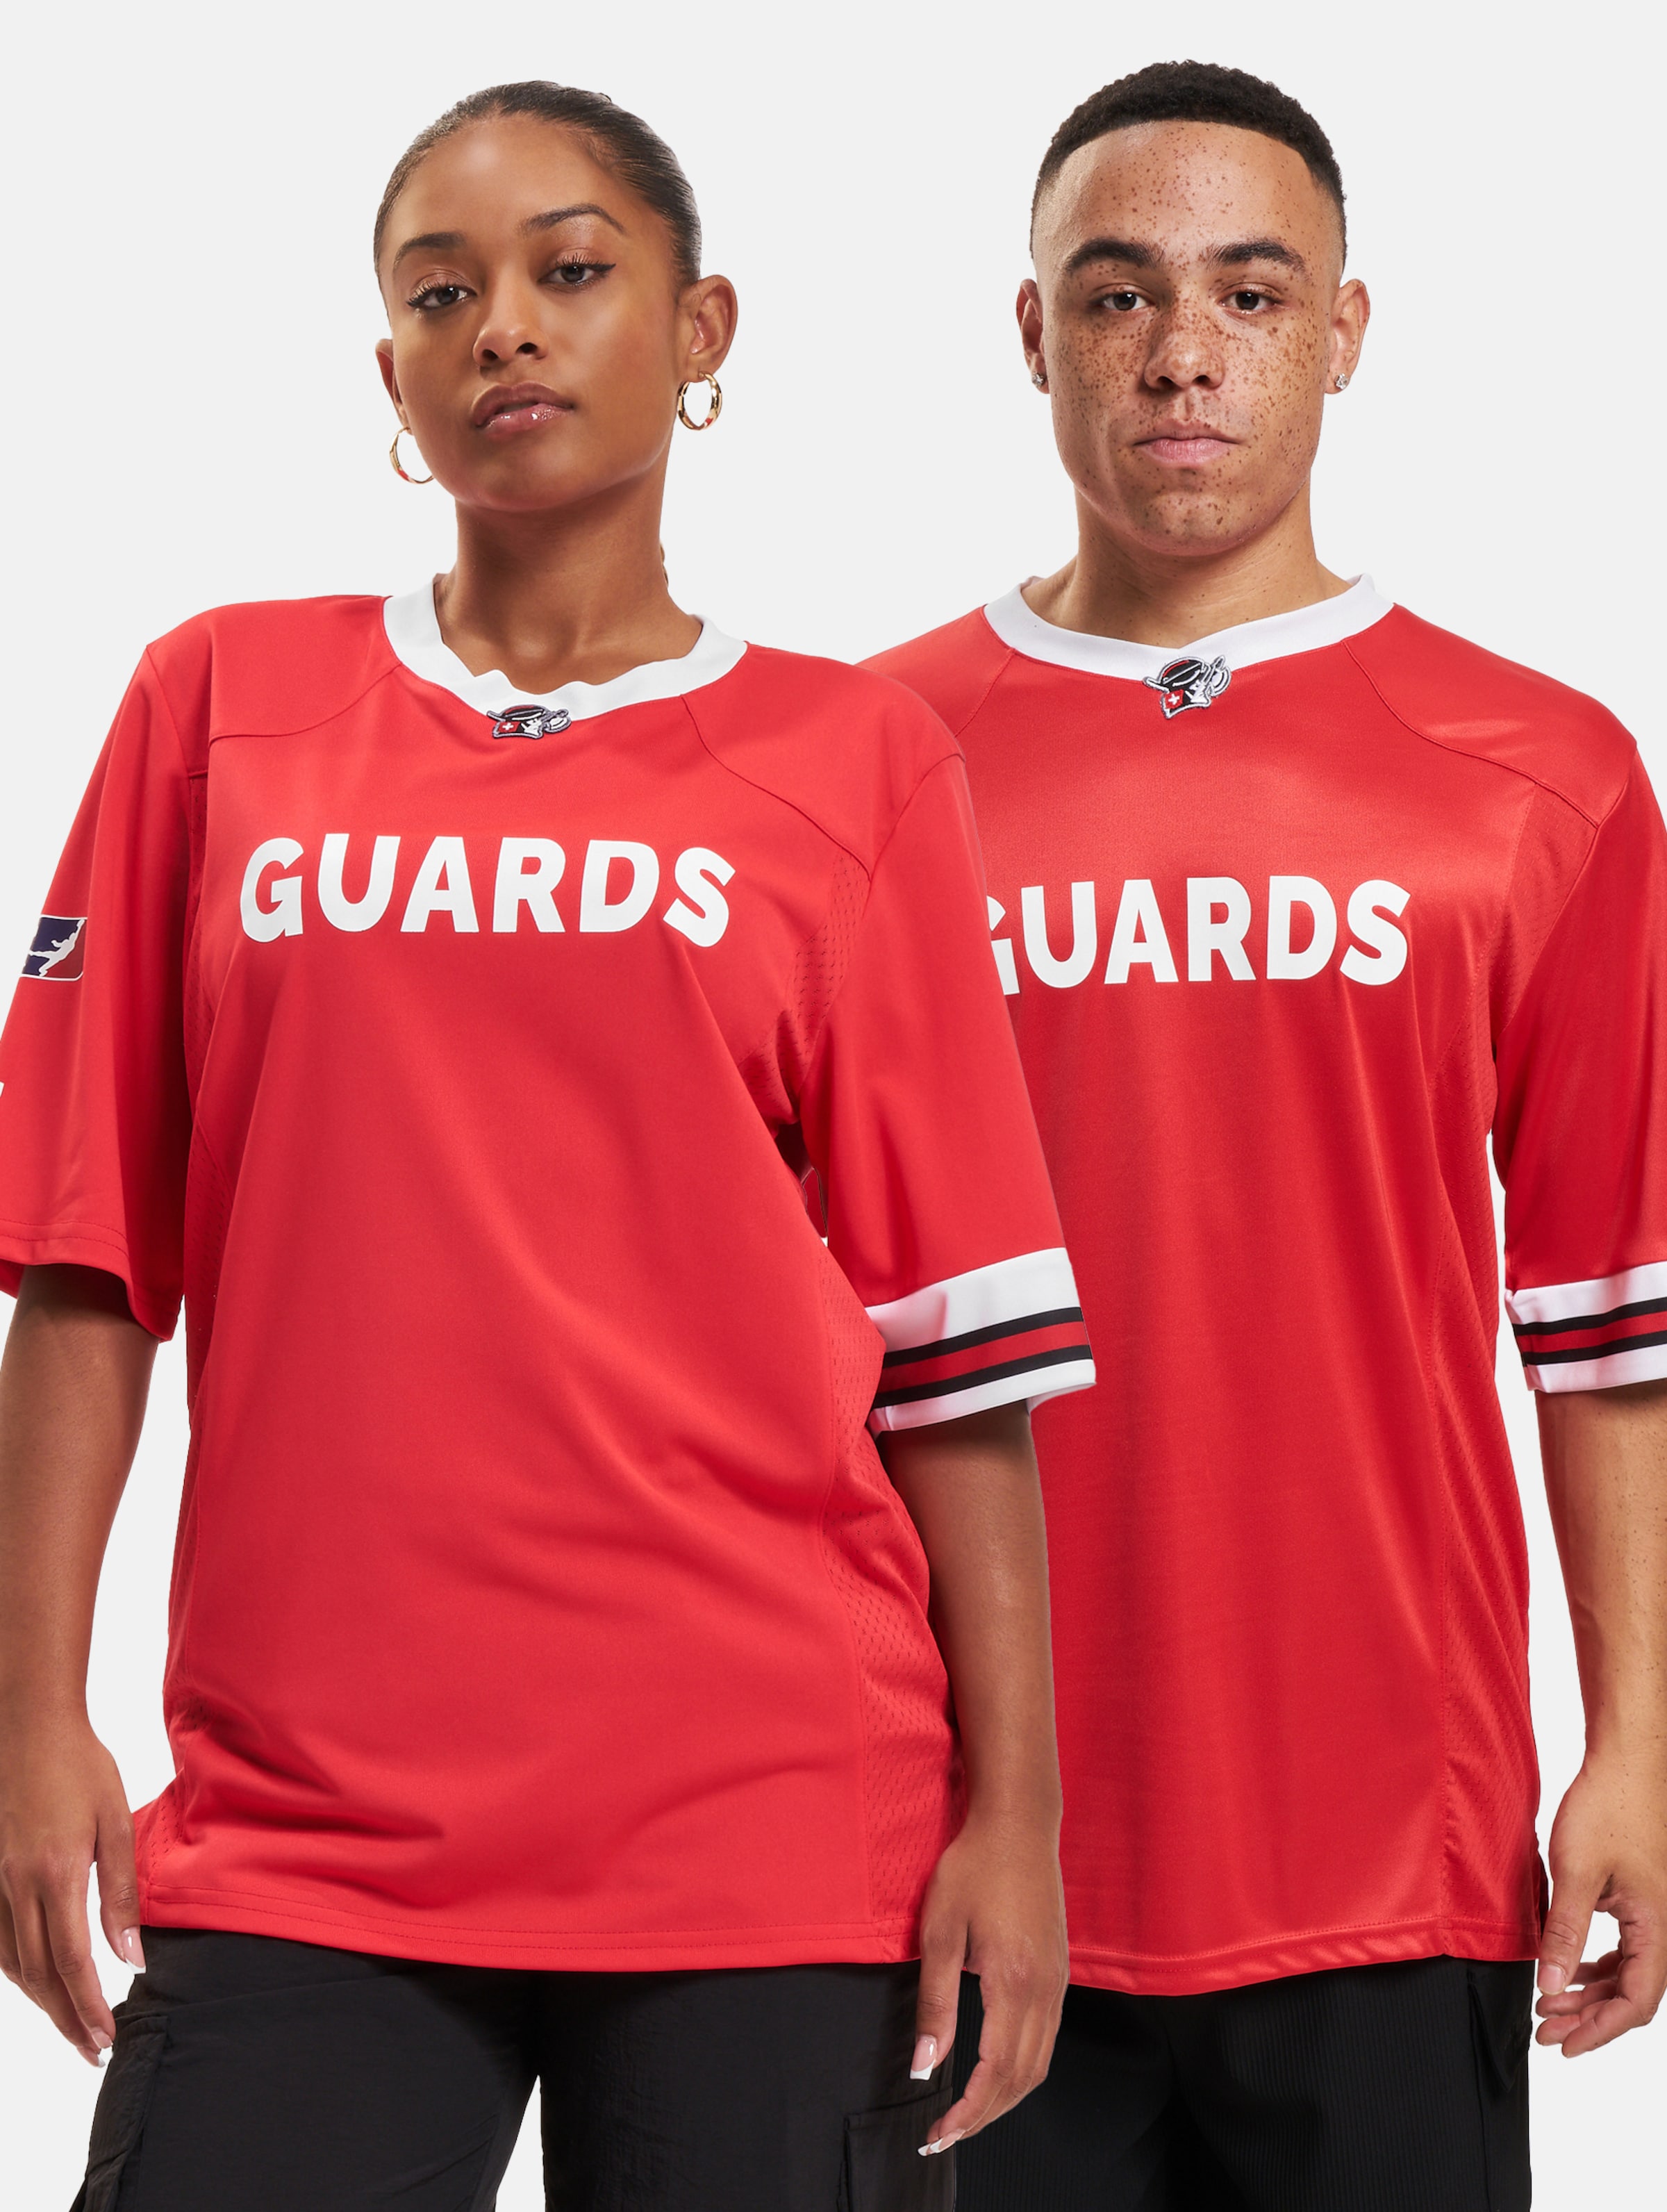 European League Of Football 1018 Helvetic Guards Authentic Game T-Shirt Vrouwen op kleur rood, Maat 5XL